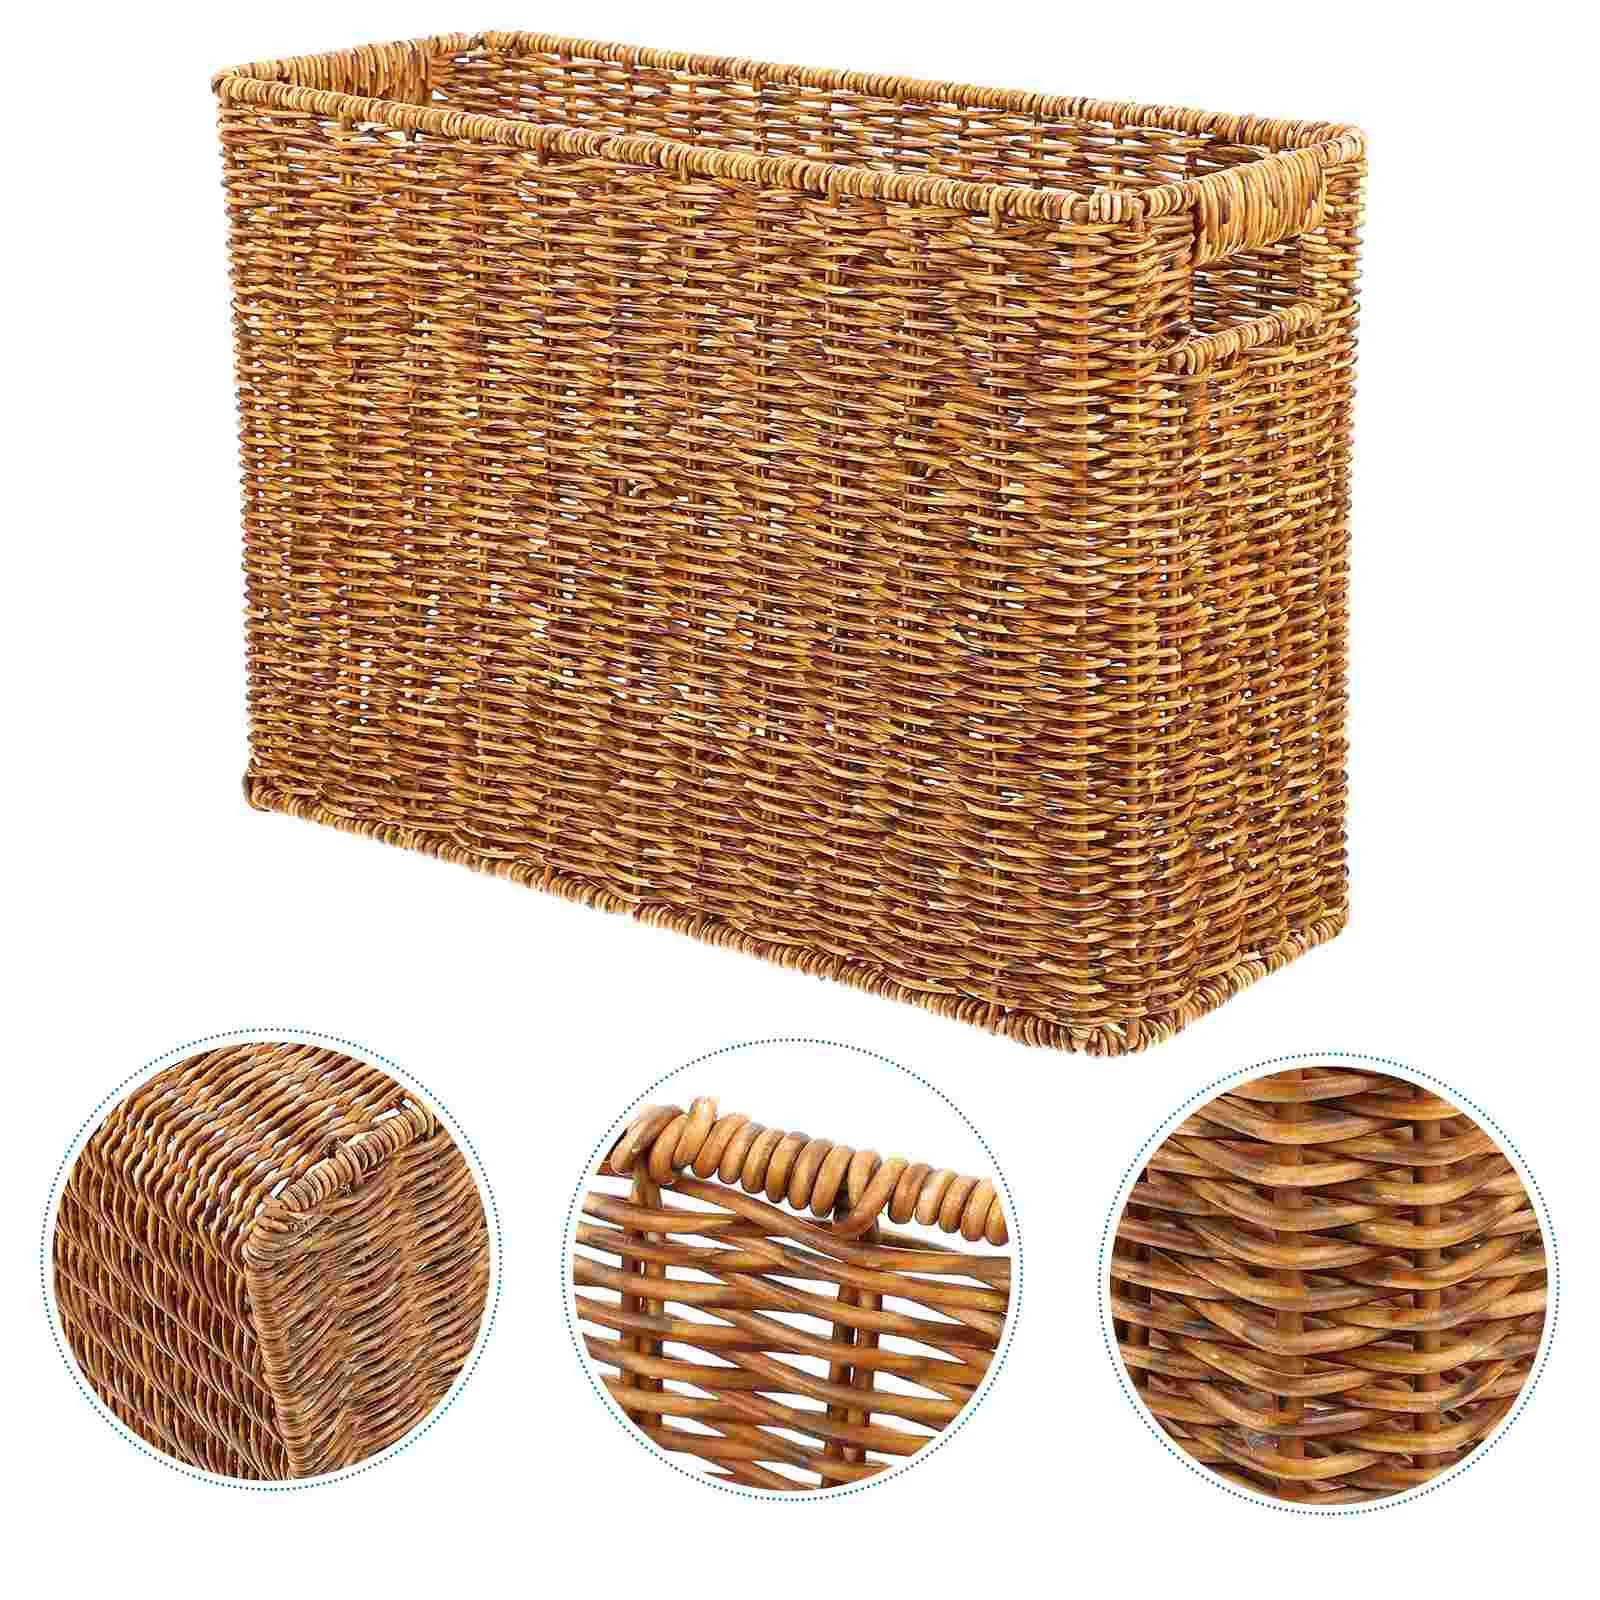 

Large Pantry Organizer Storage Cube Baskets Toy Magazine Hyacinth Water Basket Rectangular Woven Bin Seagrass Rattan Wicker